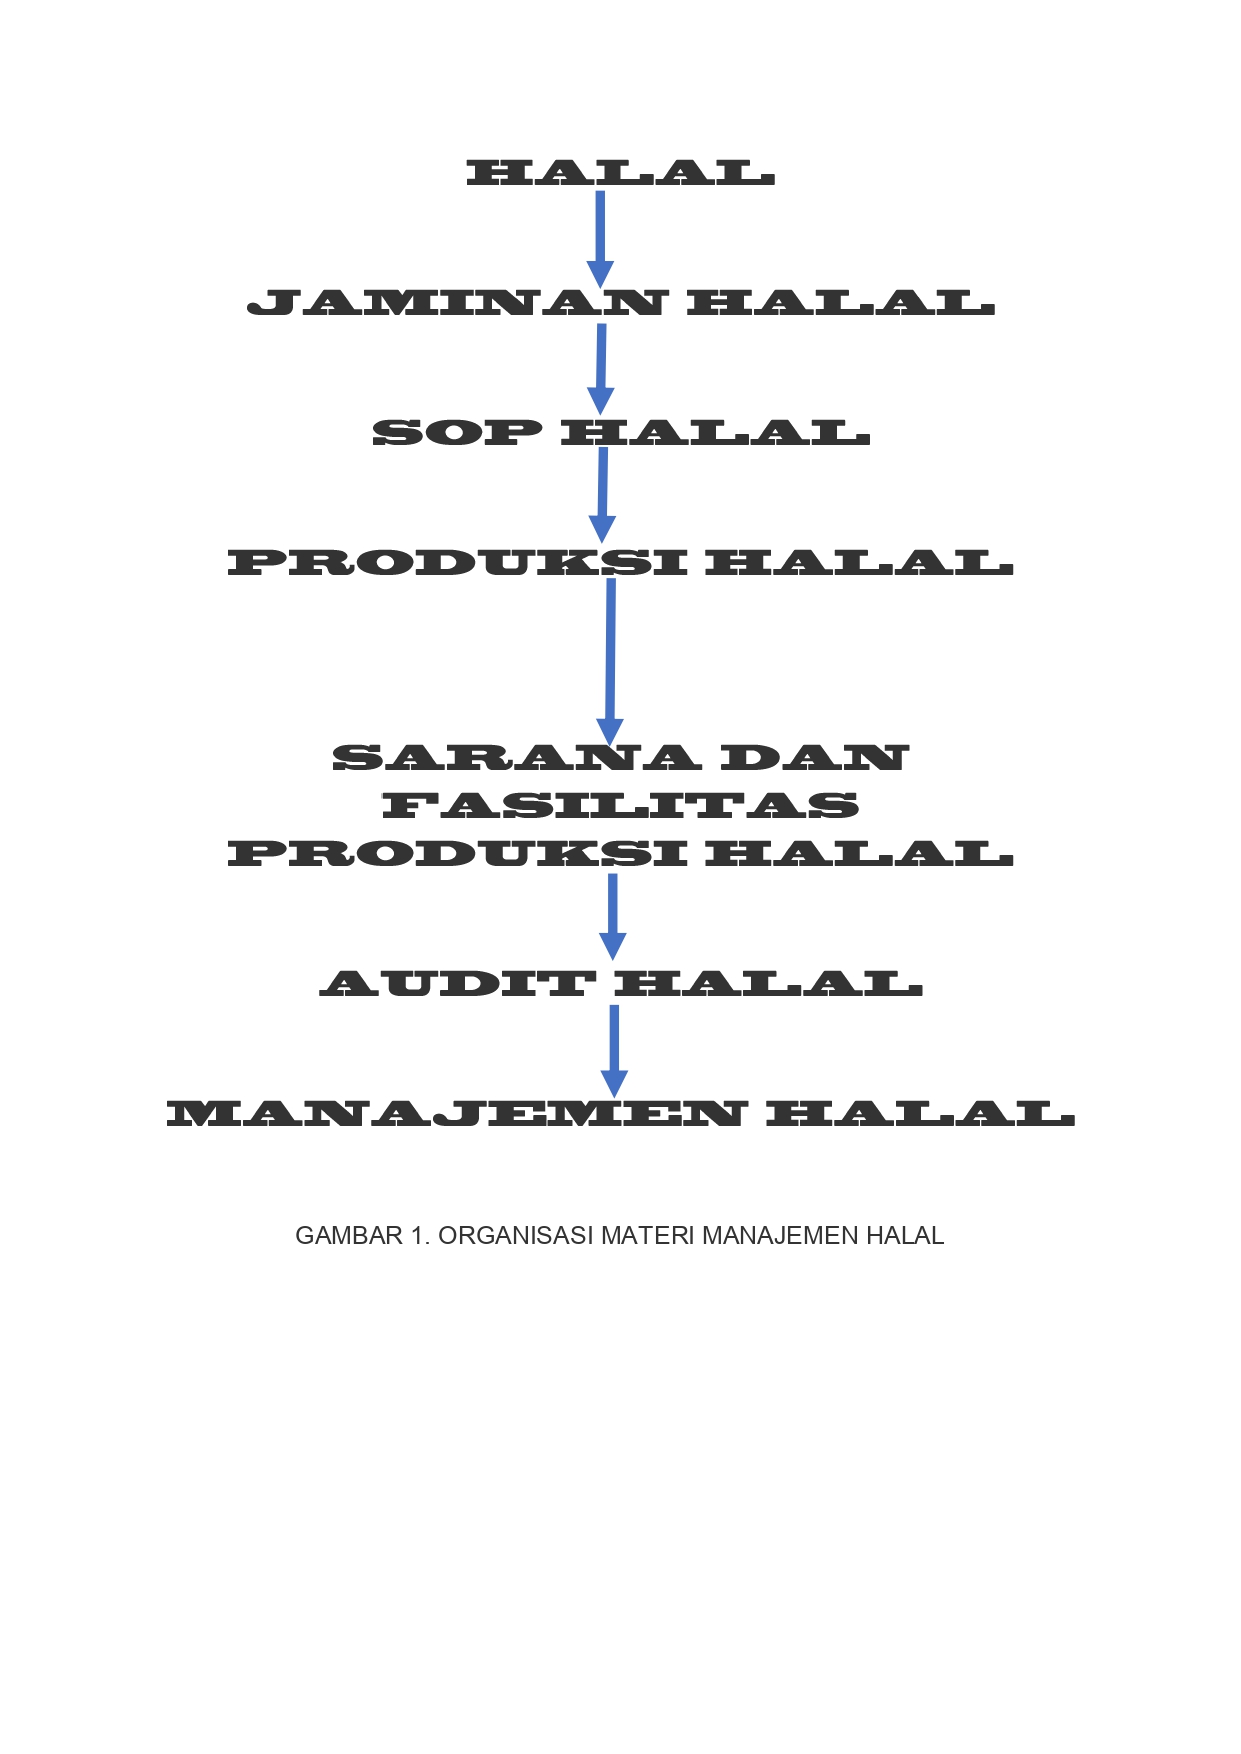 Sistem Manajemen Halal